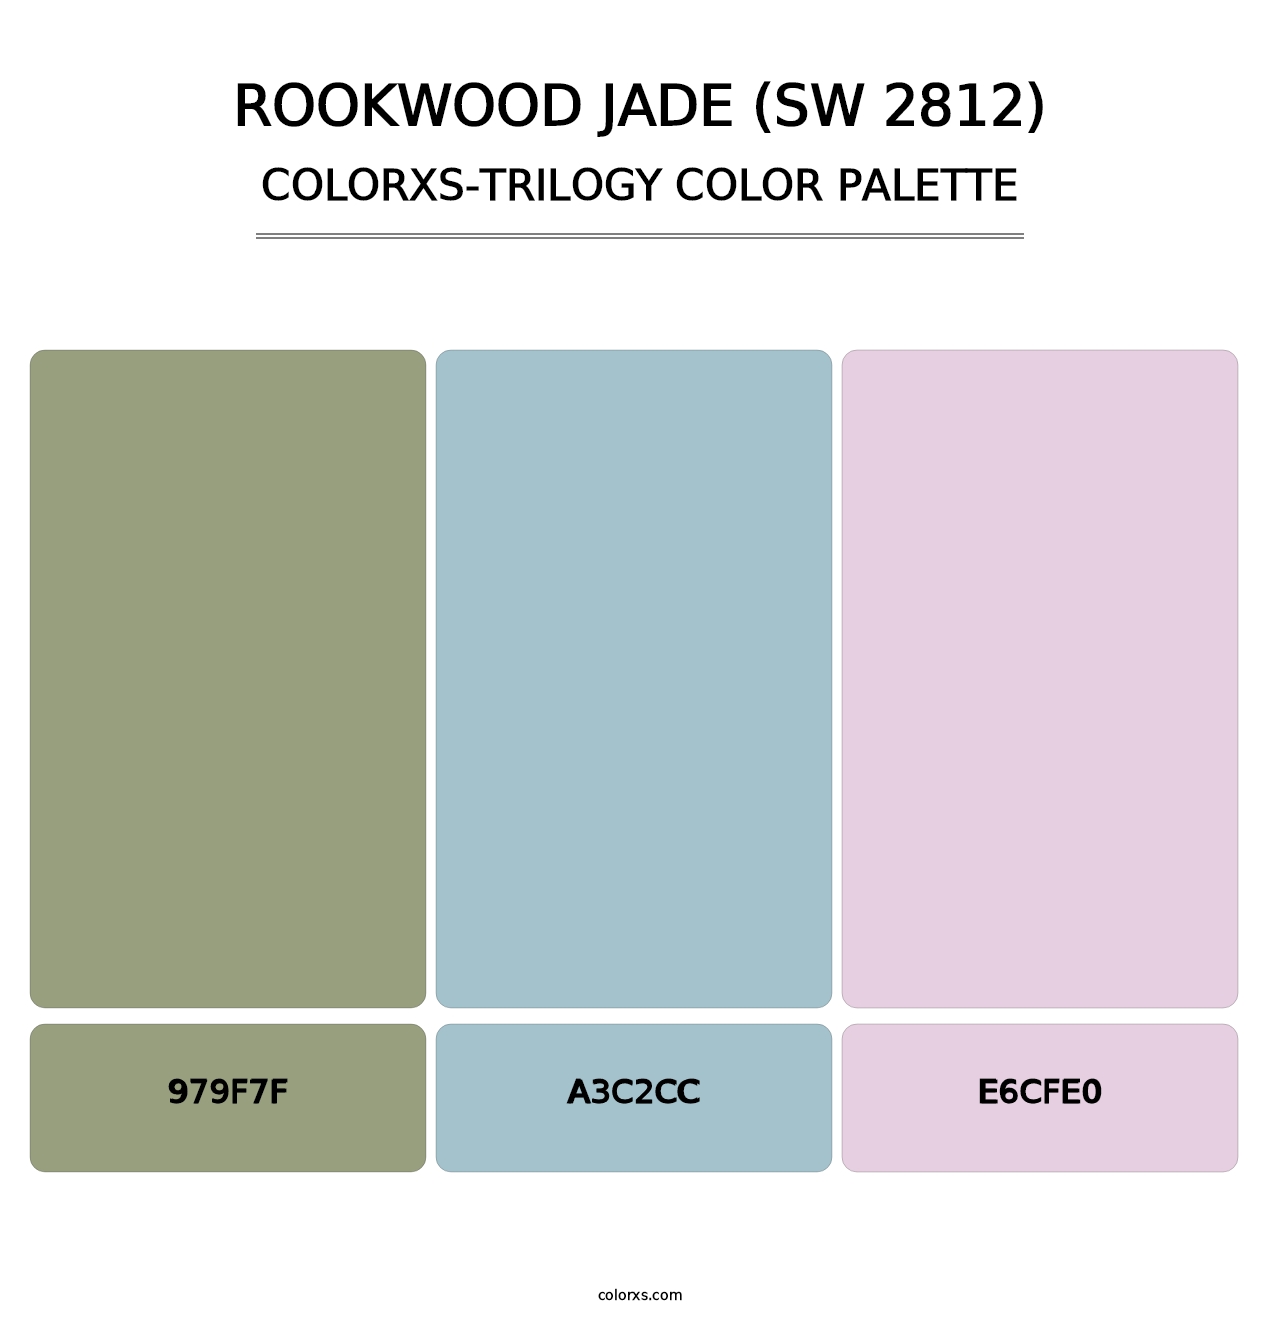 Rookwood Jade (SW 2812) - Colorxs Trilogy Palette